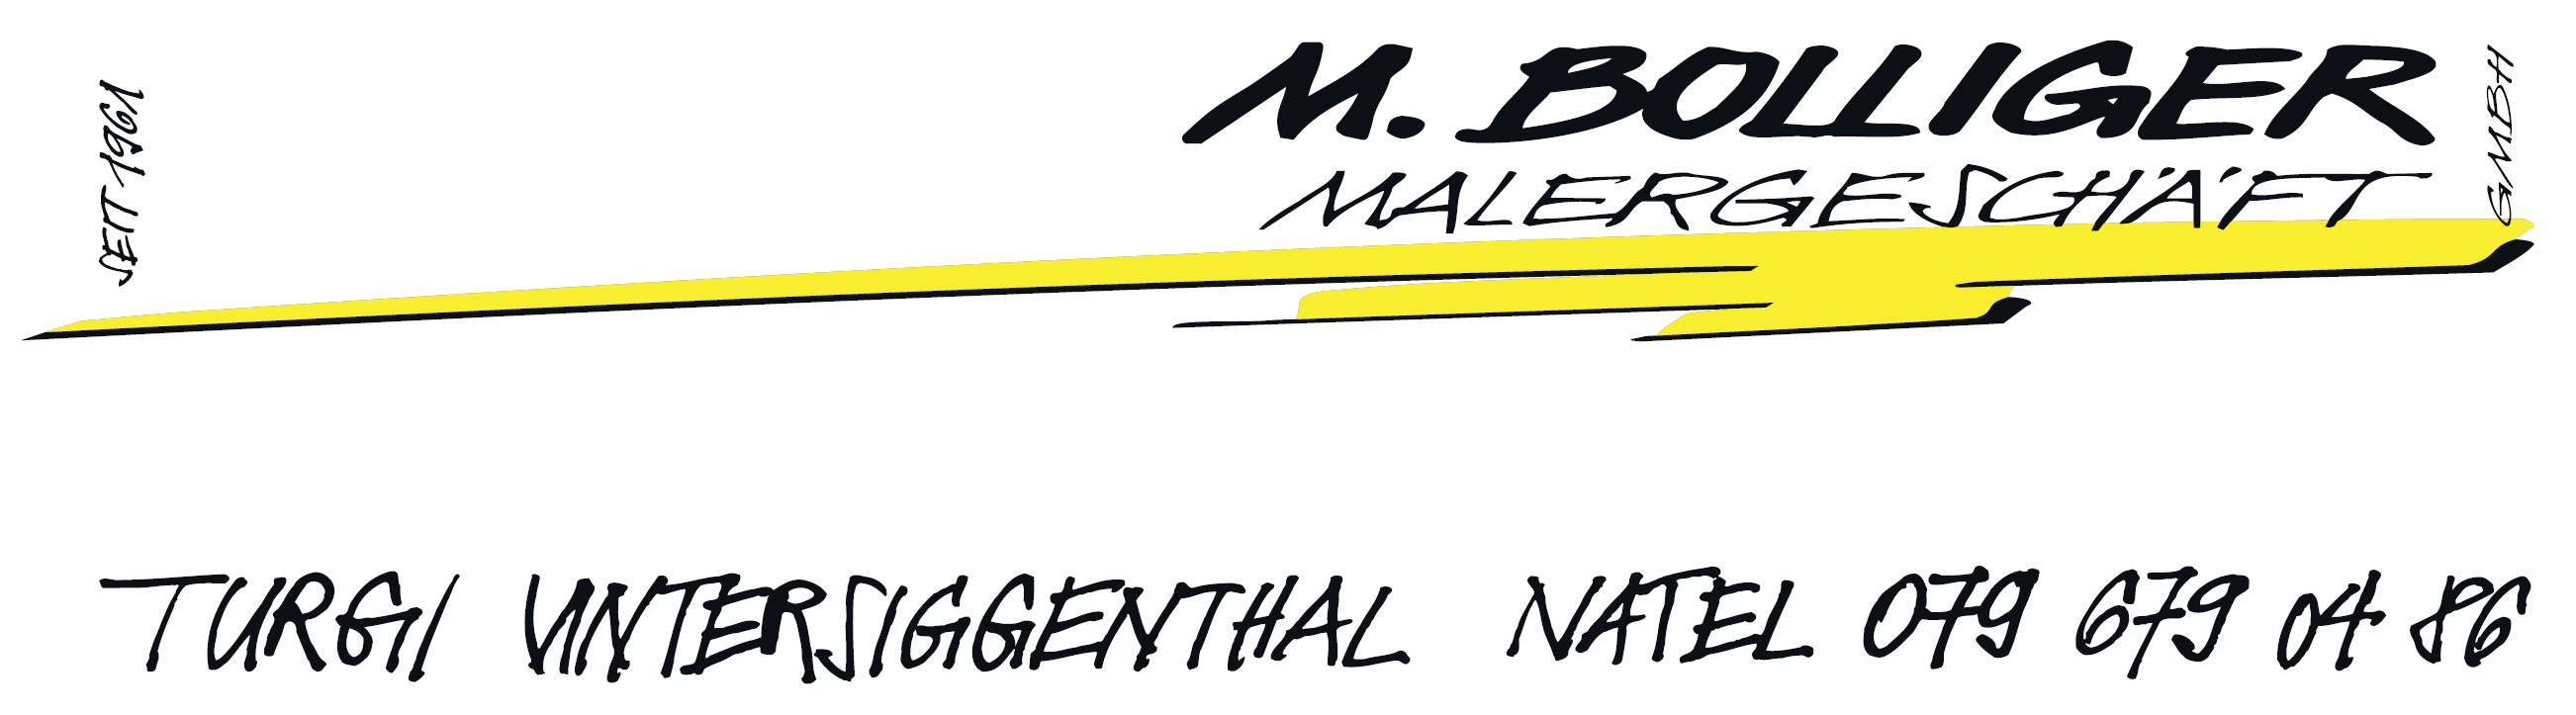 M. Bolliger Maler Geschäft GmbH